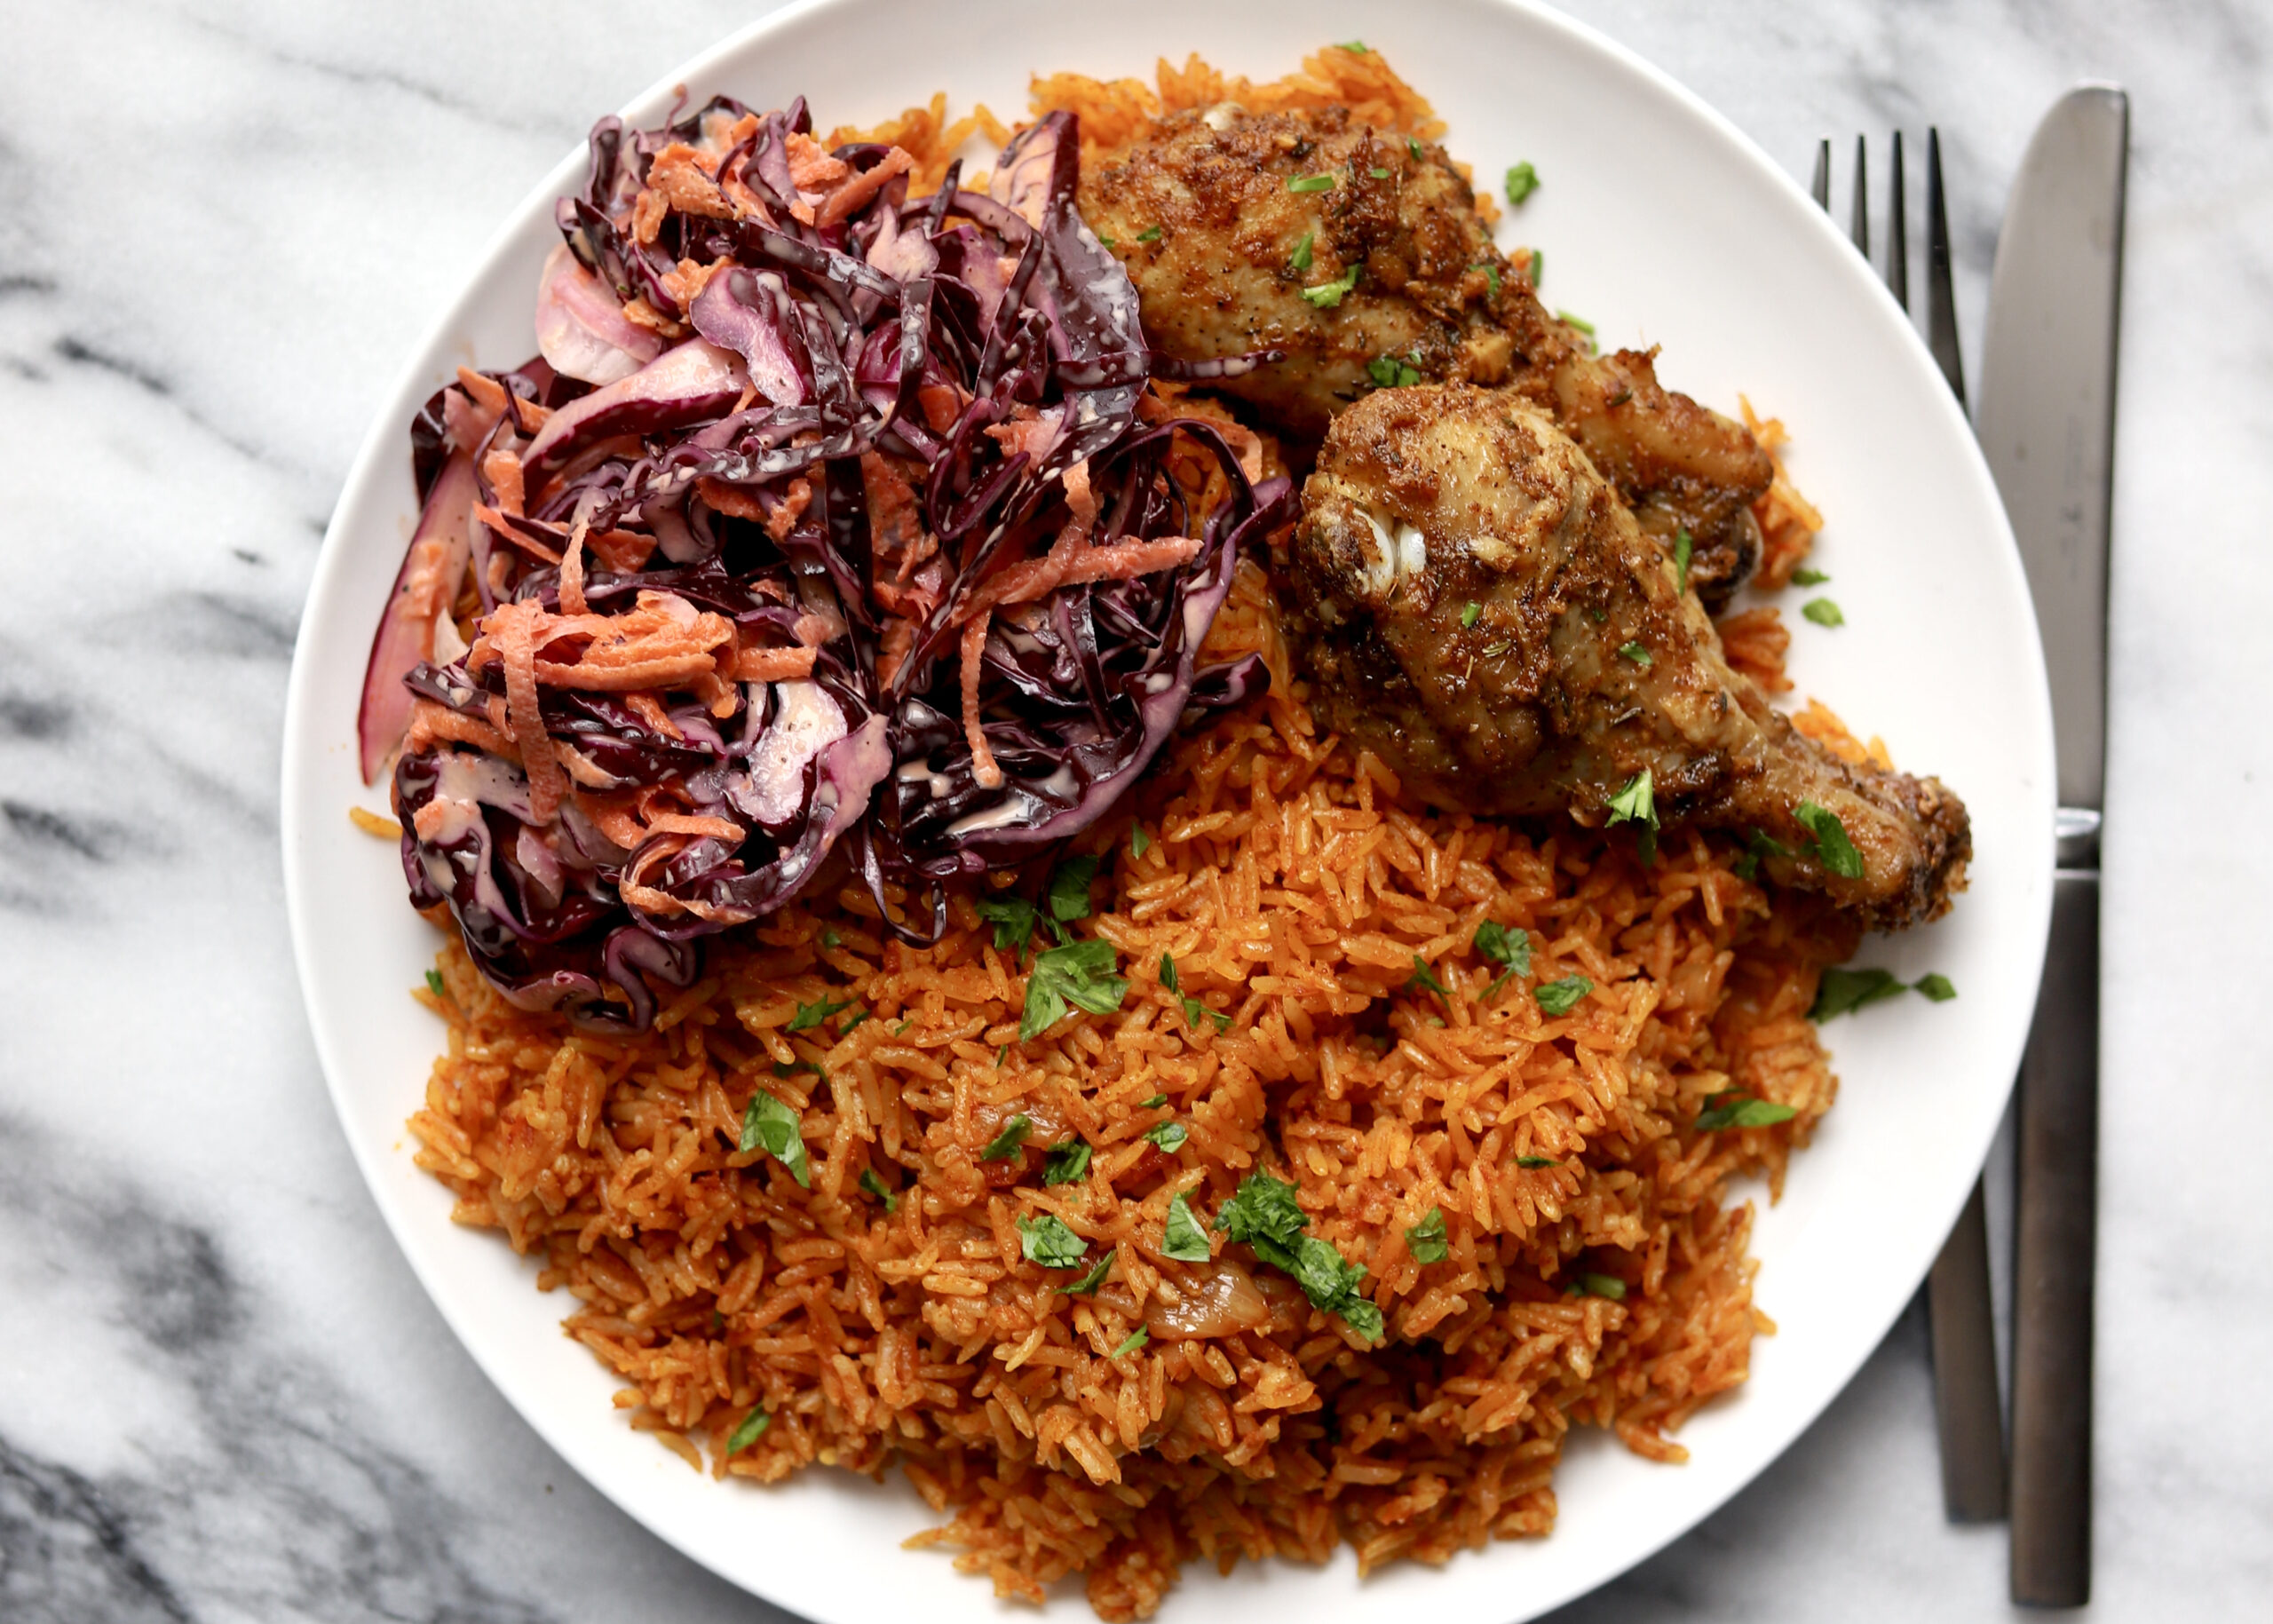 Jollof Rice and Chicken with Coleslaw - Travelandmunchies